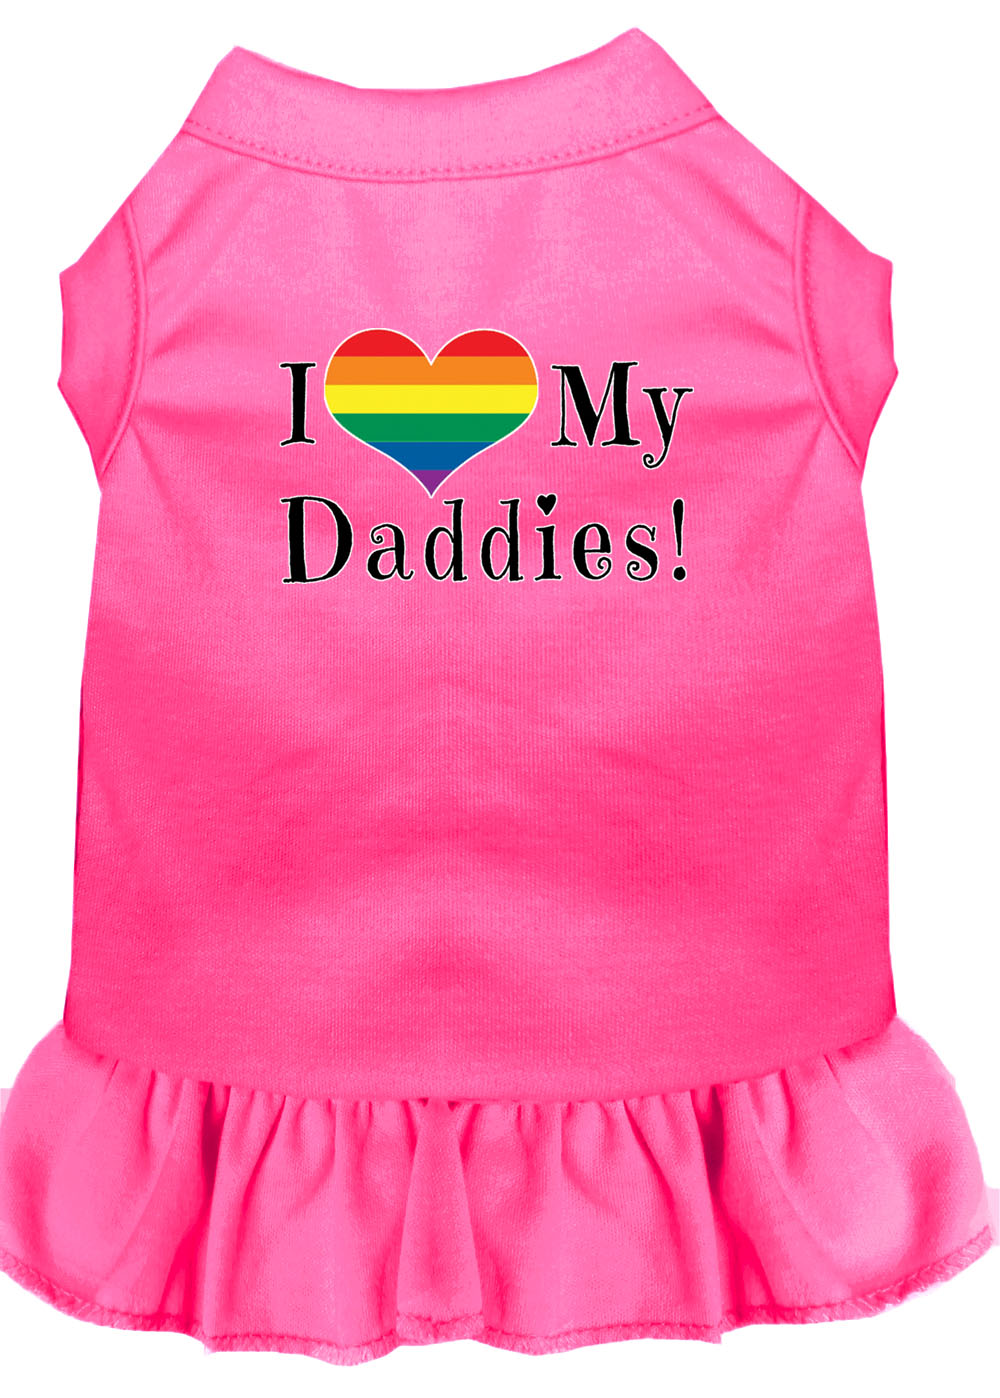 I Heart my Daddies Screen Print Dog Dress Bright Pink Sm